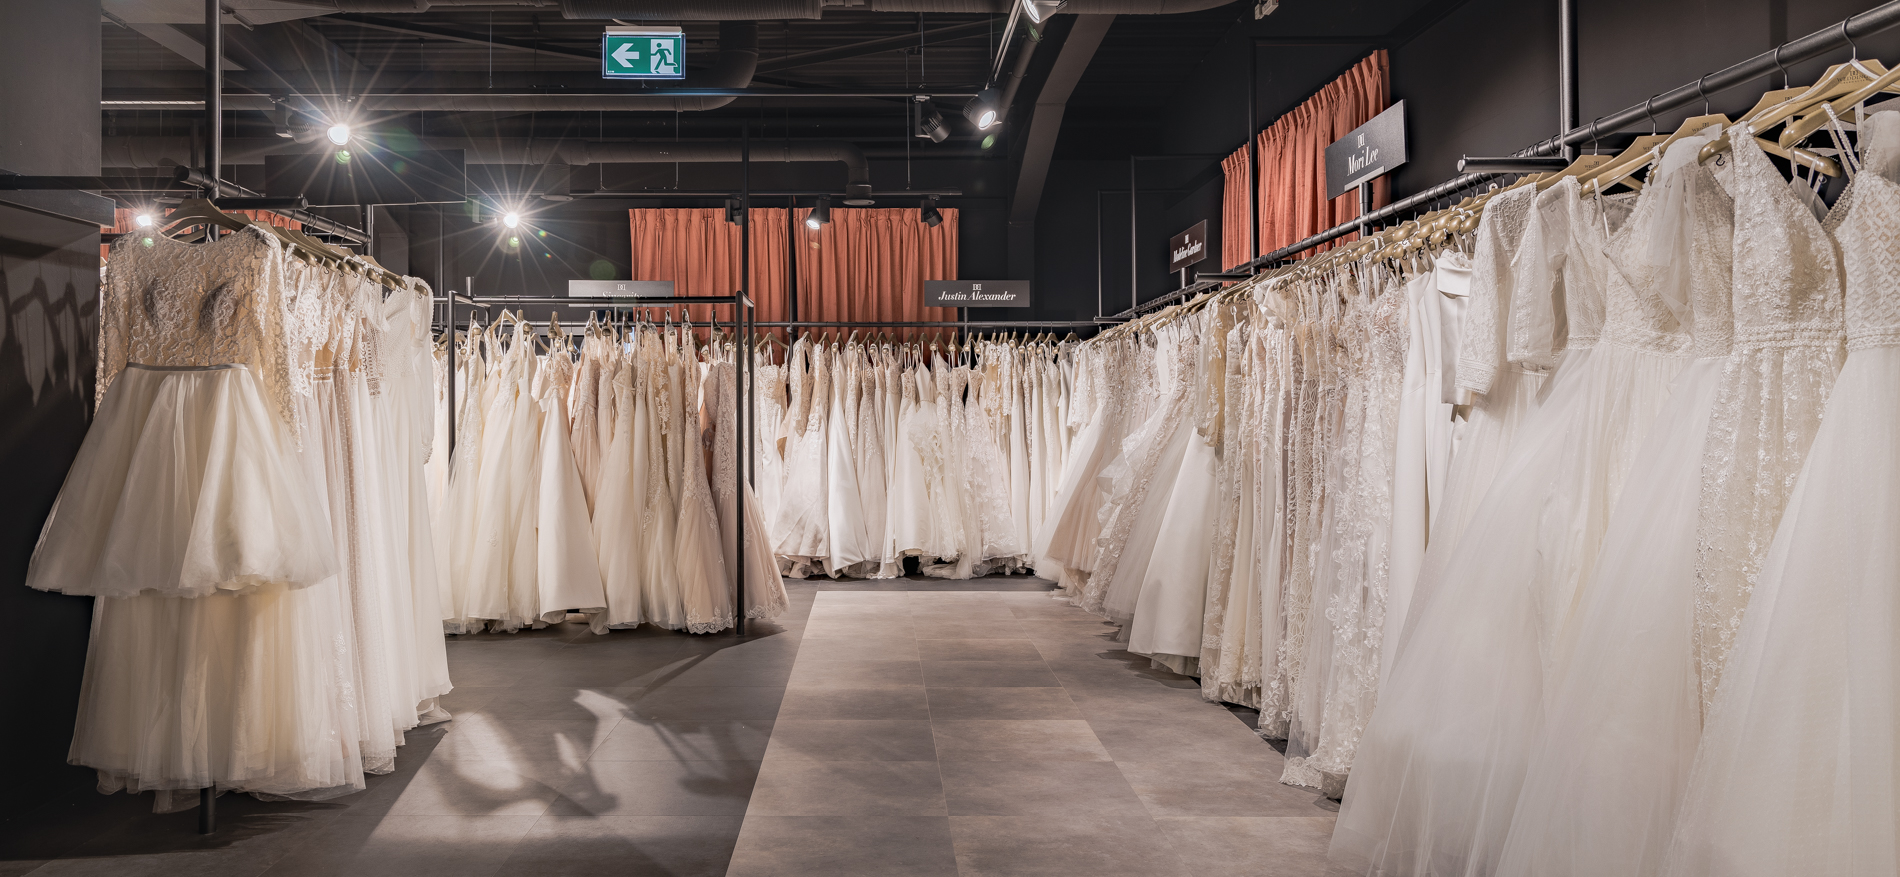 Wedding World bruidswinkel | Oberhausen (DE) - Fashion